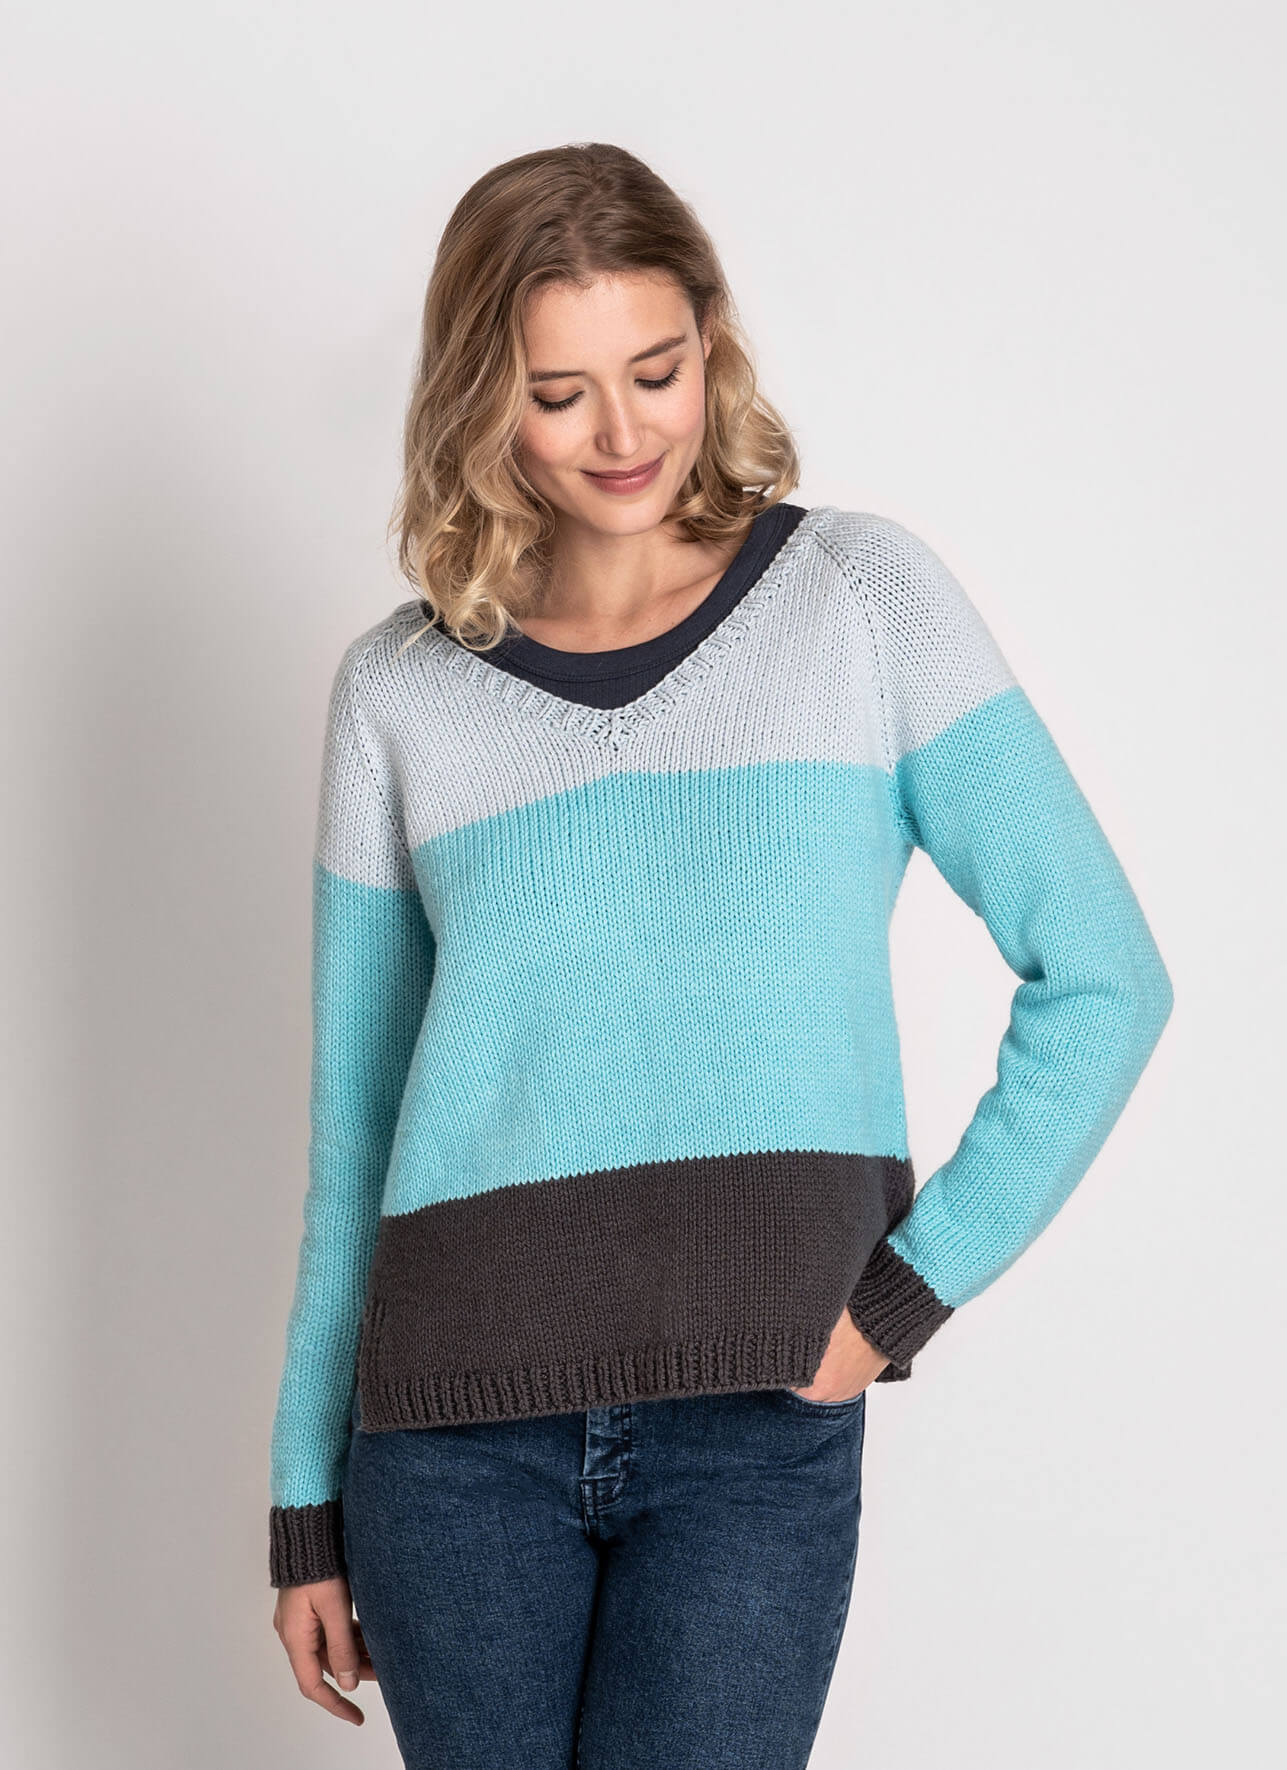 Sweater Sweater Kit Blue Sky Fibers